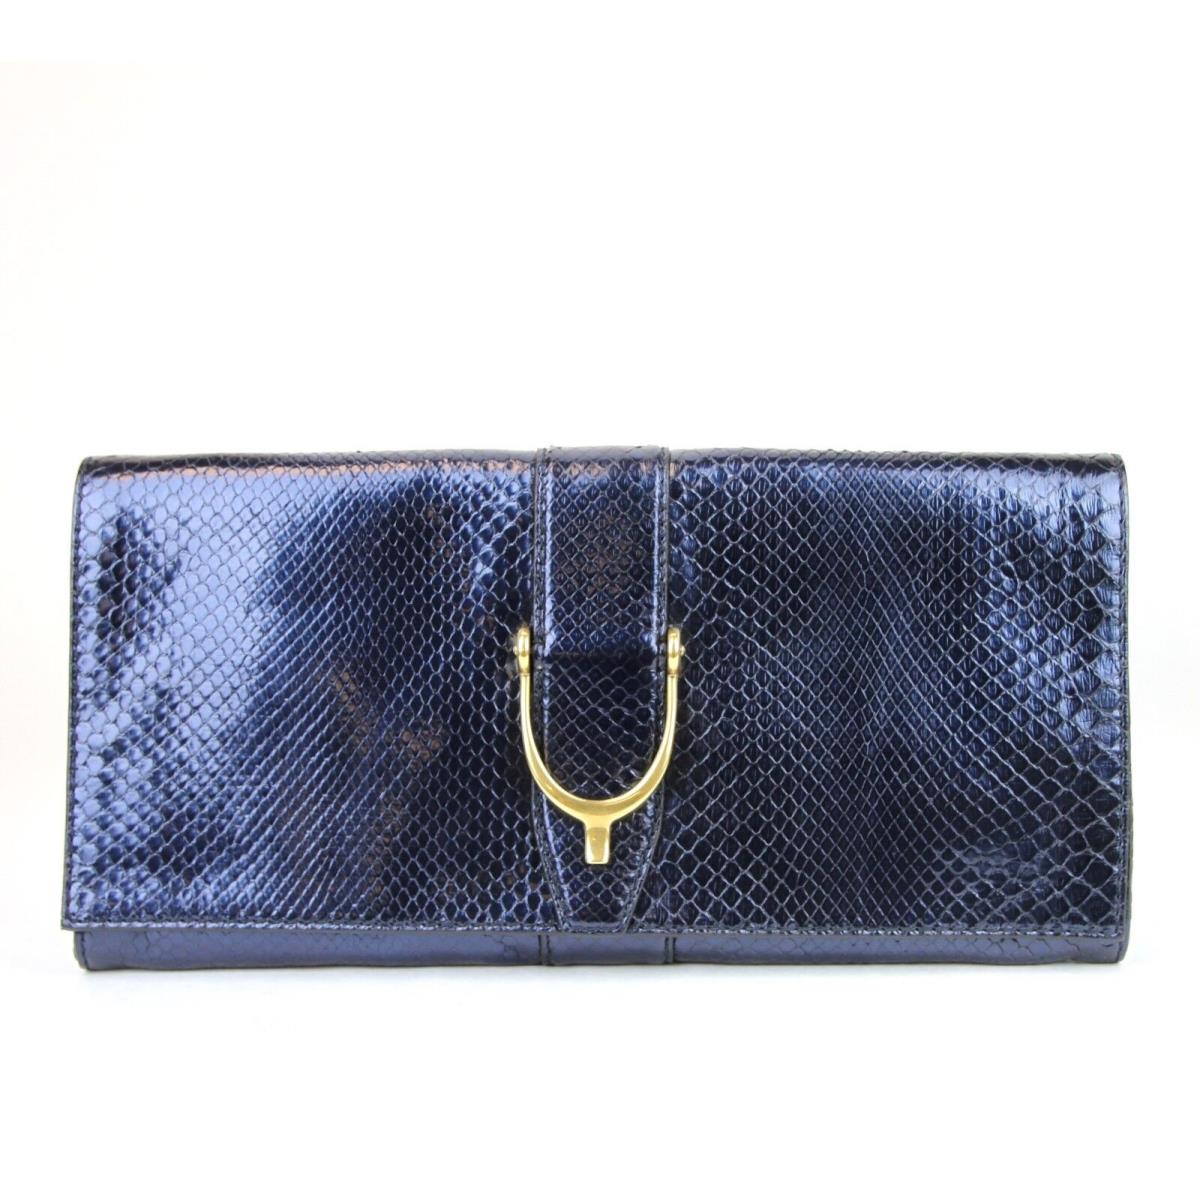 Gucci Soft Stirrup Python Clutch Evening Bag Large 304719 Blue/4113